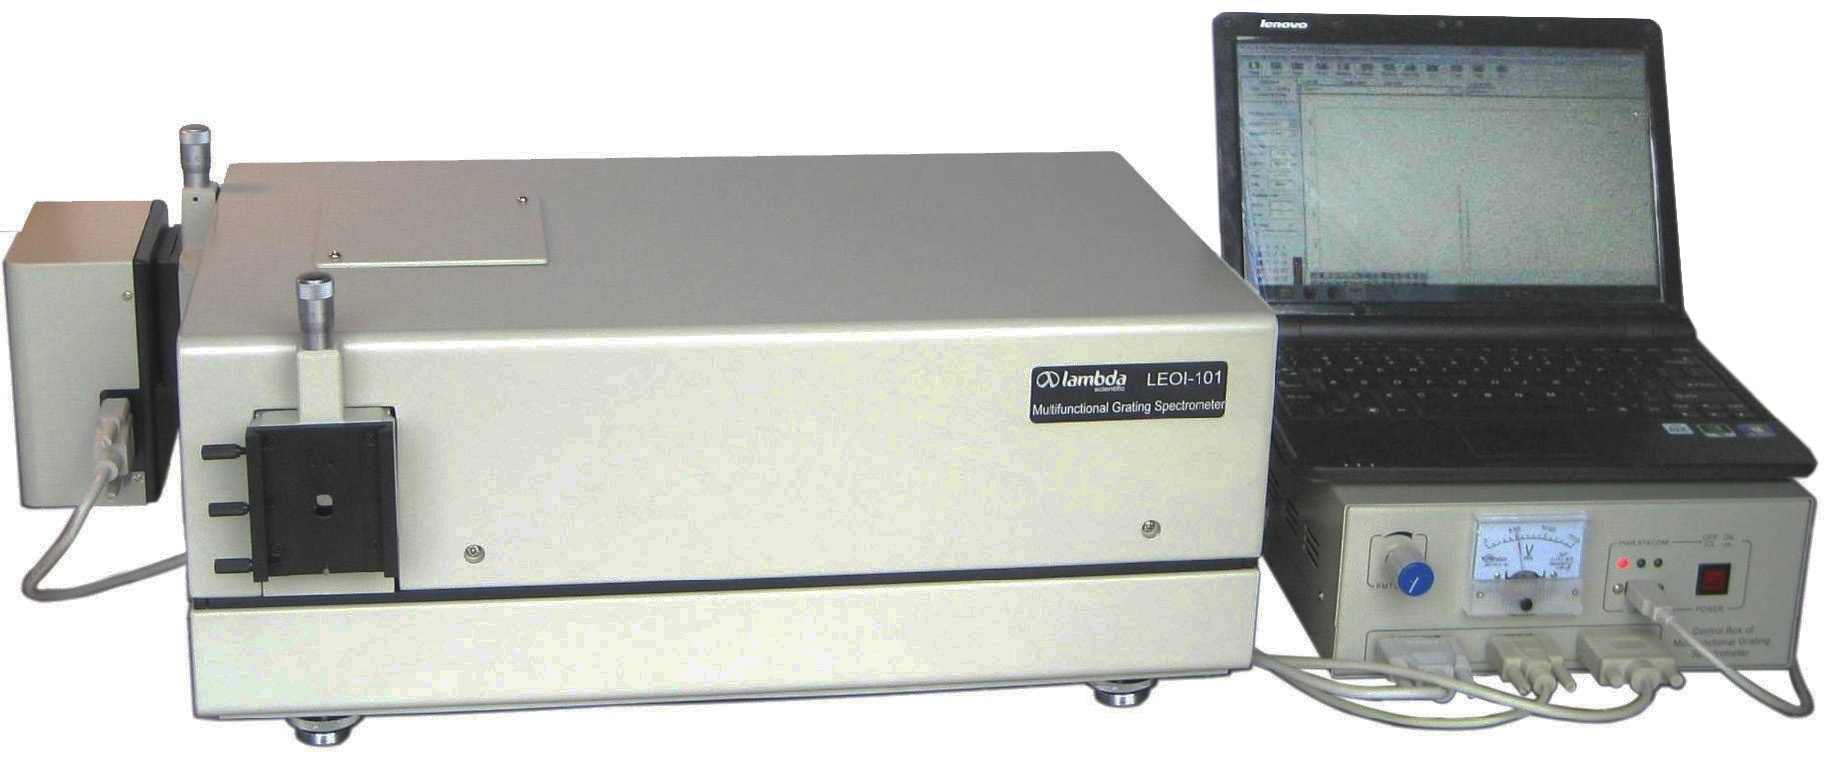 LEOI-101 Modular Multifunctional Grating Spectrometer/Monochromator